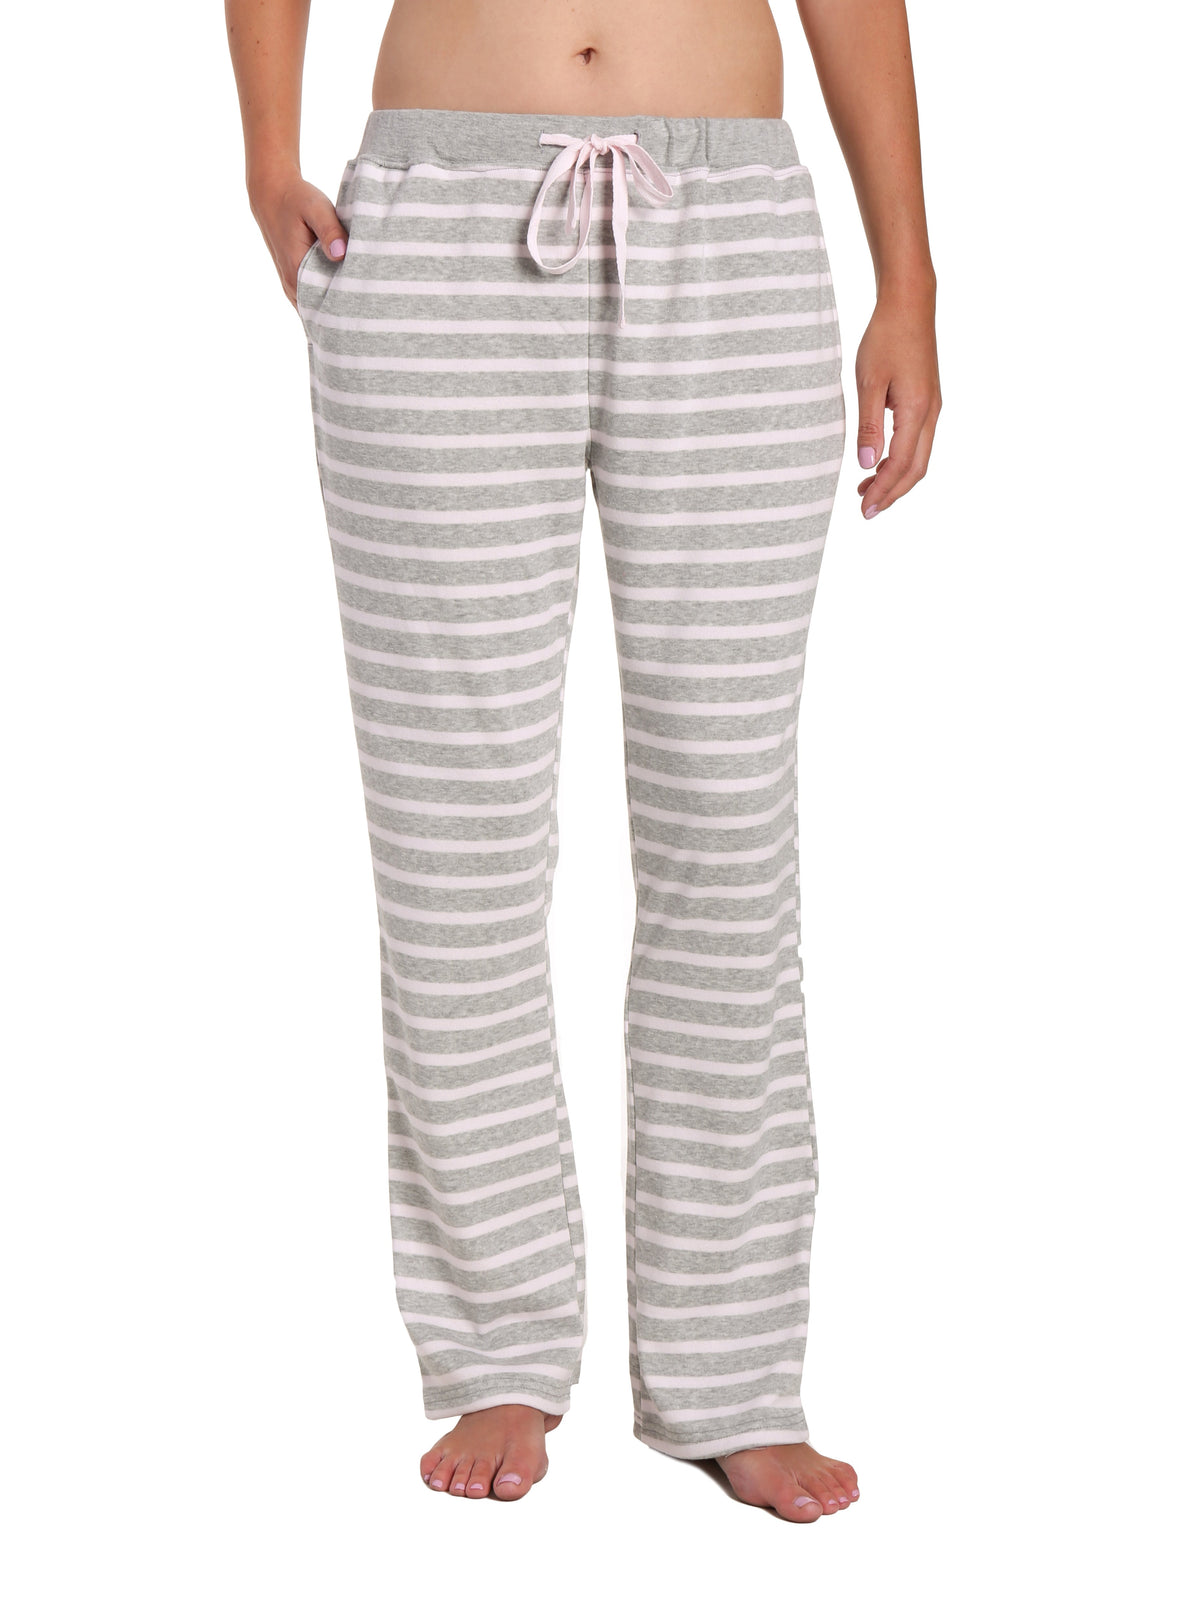 Womens Towel Brushed Sweatpants - Stripes Grey Pink